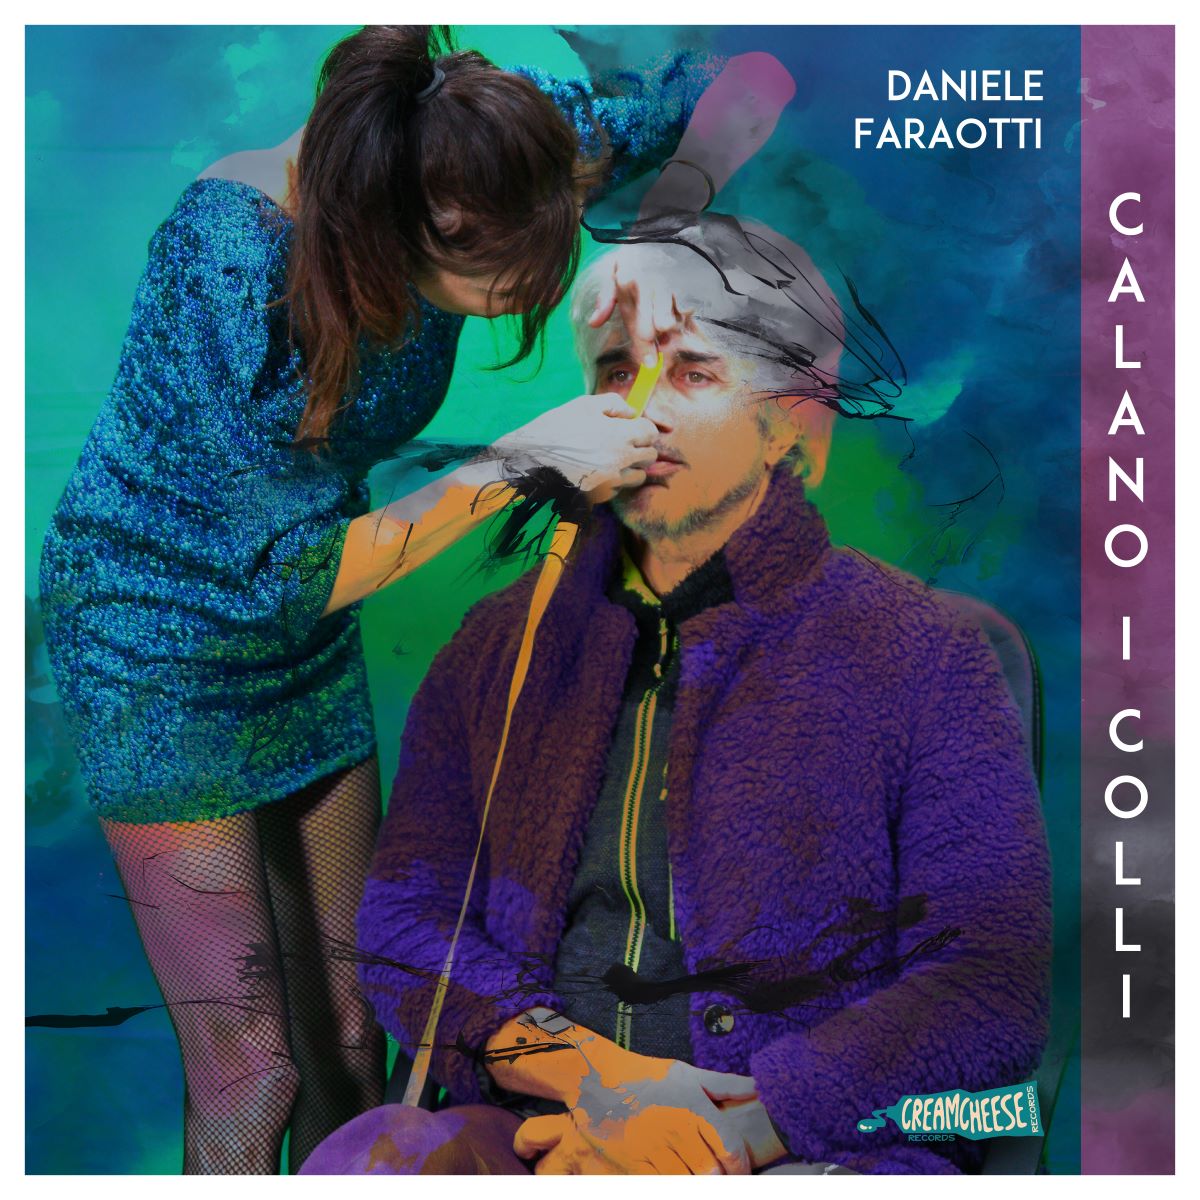 Daniele Faraotti - Il singolo “Calano i Colli”